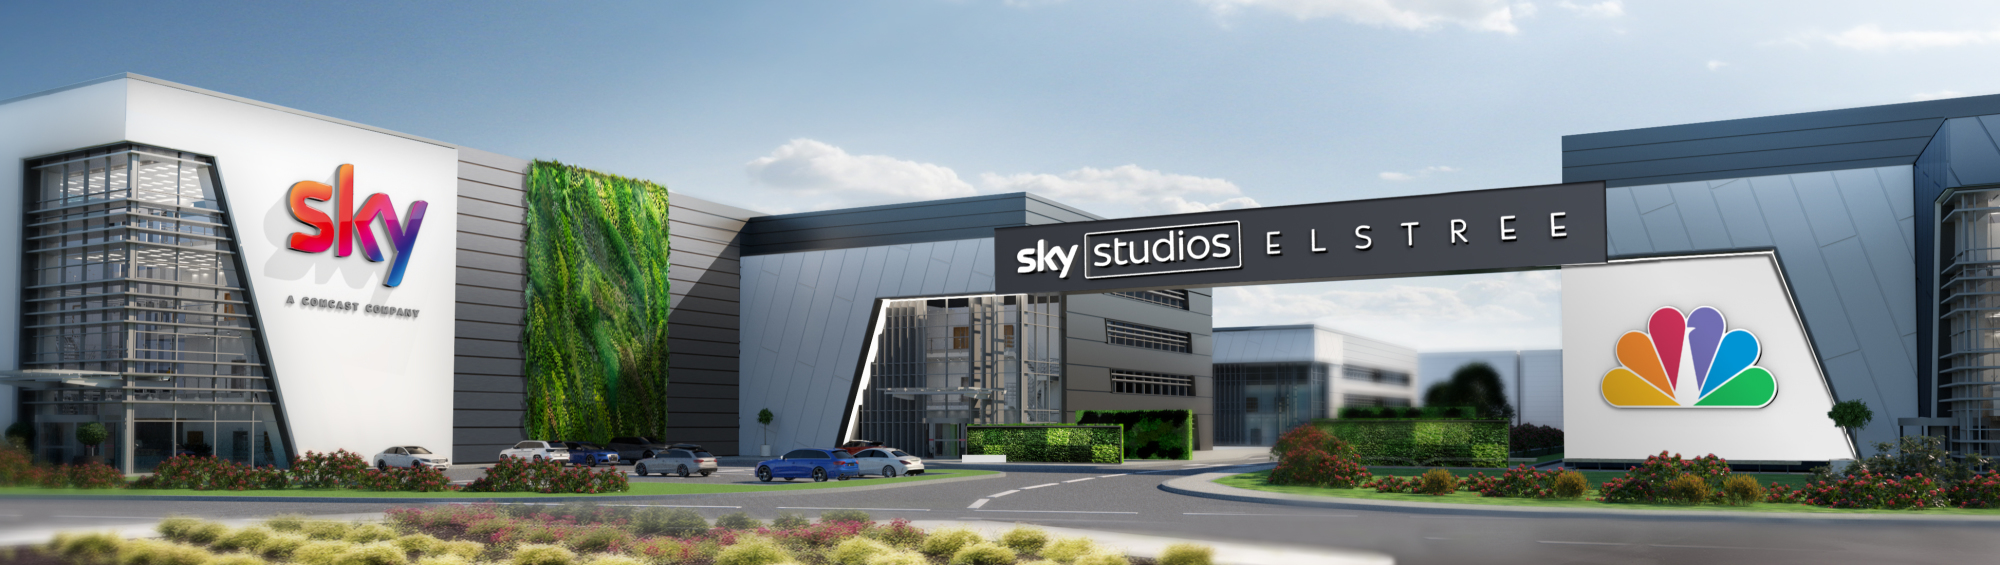 BAM to Build Sky Studios Elstree